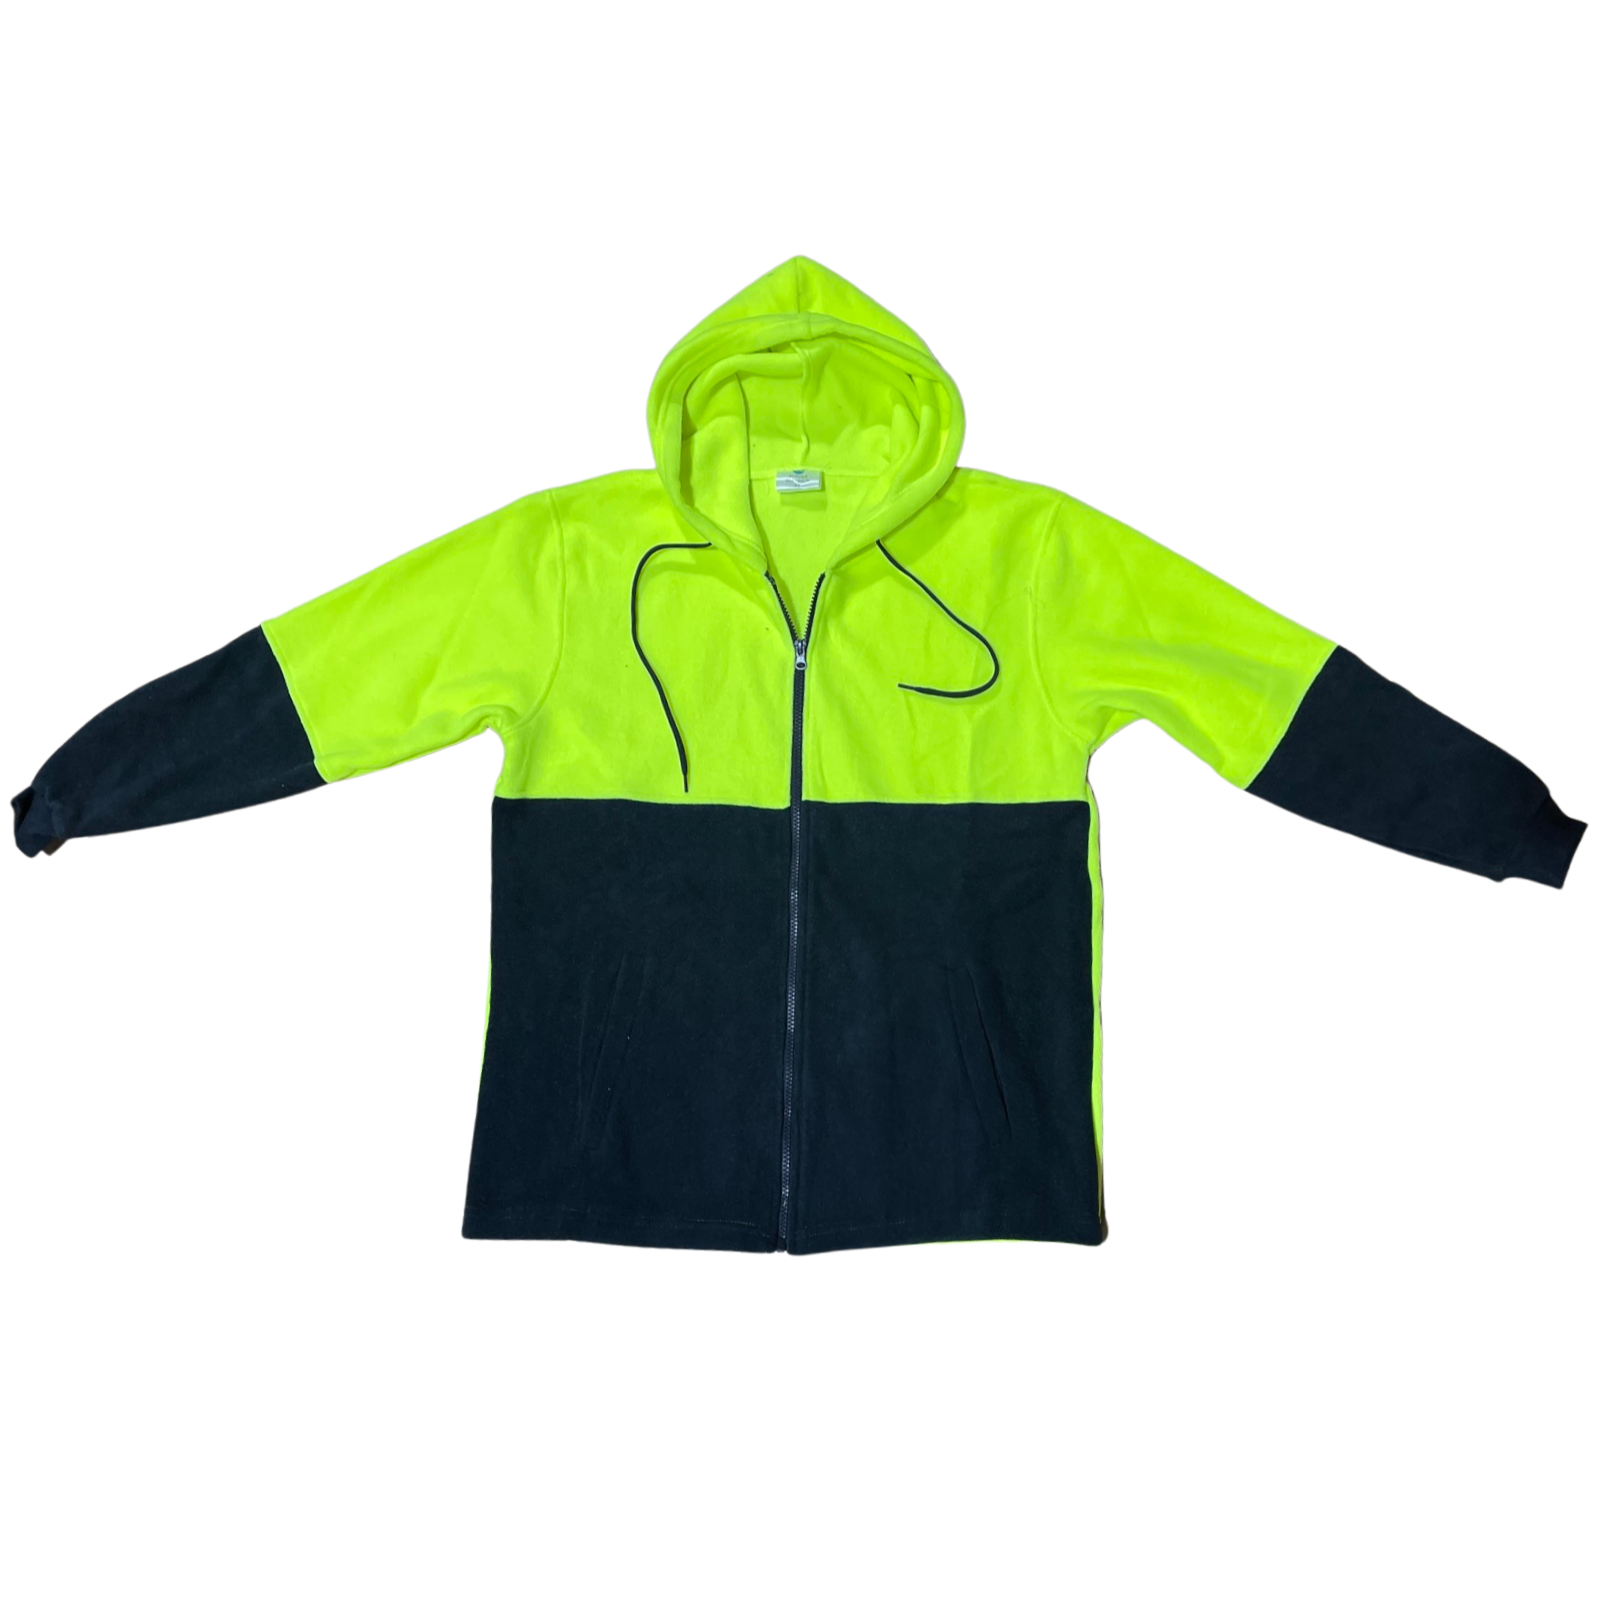 Full Zip Hi Vis Polar Fleece Hoodie Jumper Safety Workwear Fleecy Jacket Unisex - Yellow/Navy - M